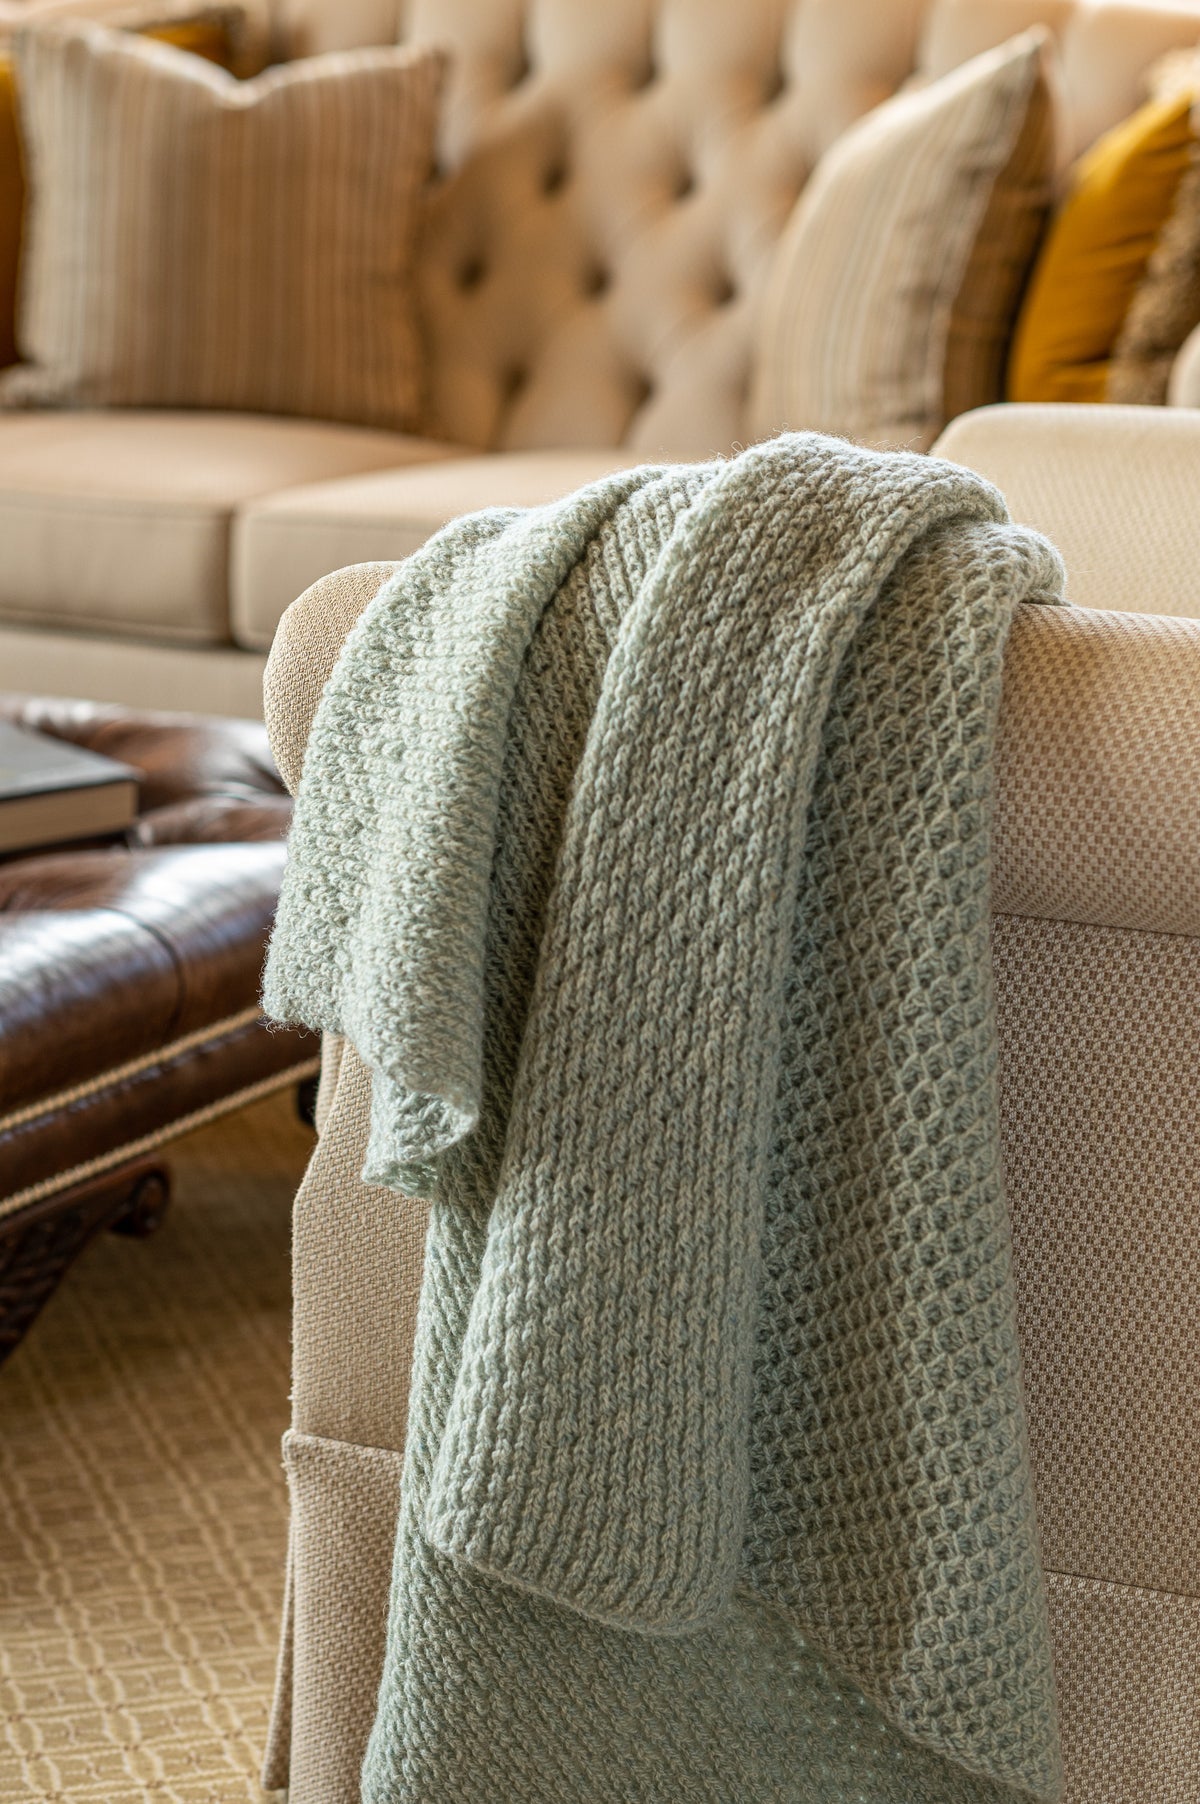 Natural Afghan Linen and Lambs' Wool Blanket – Irish Linen Properties